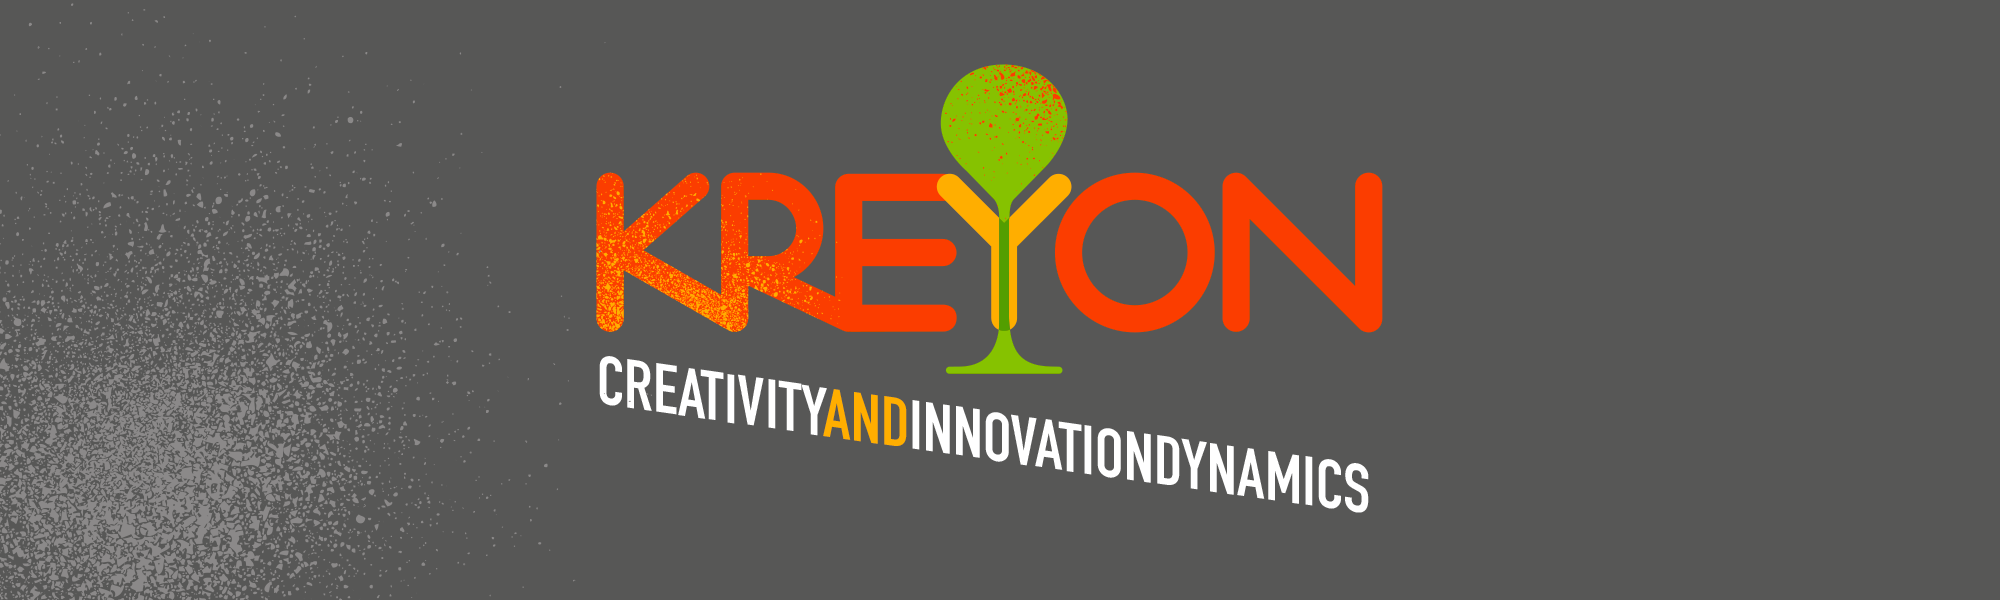 Kreyon Project - Creativity and Innovation Dynamics